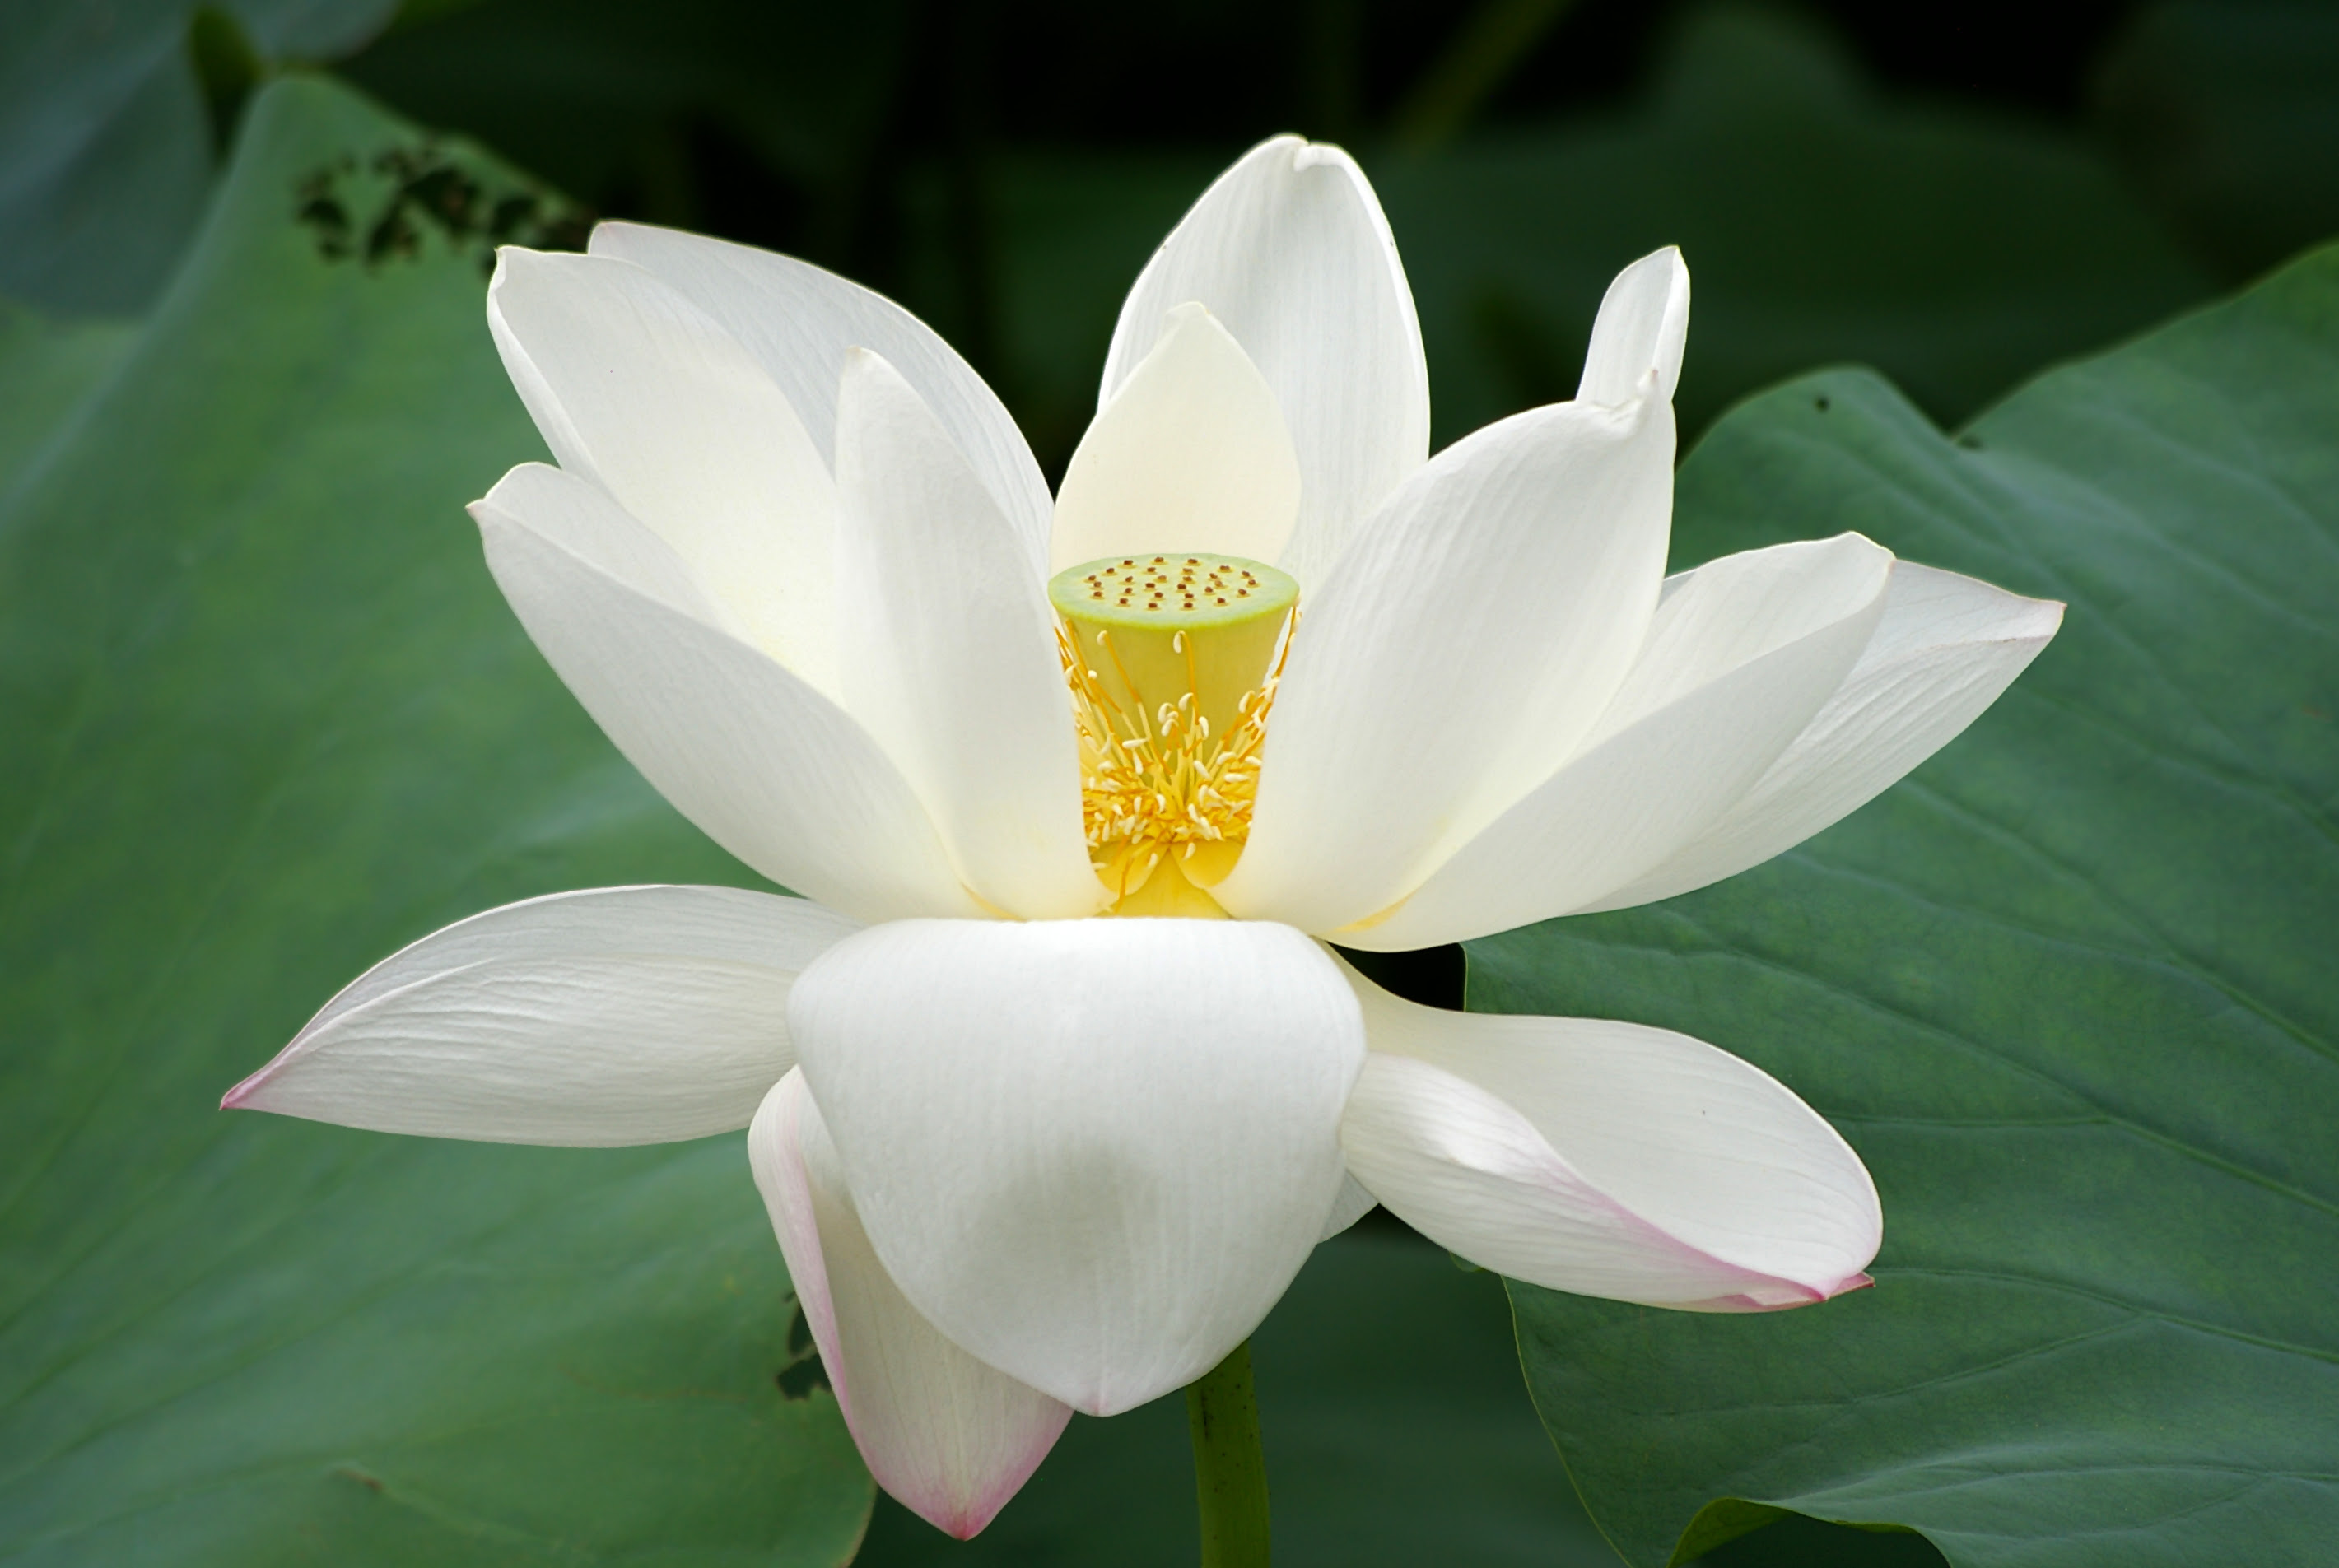 Description 20090809 Lotus flower 2736.jpg